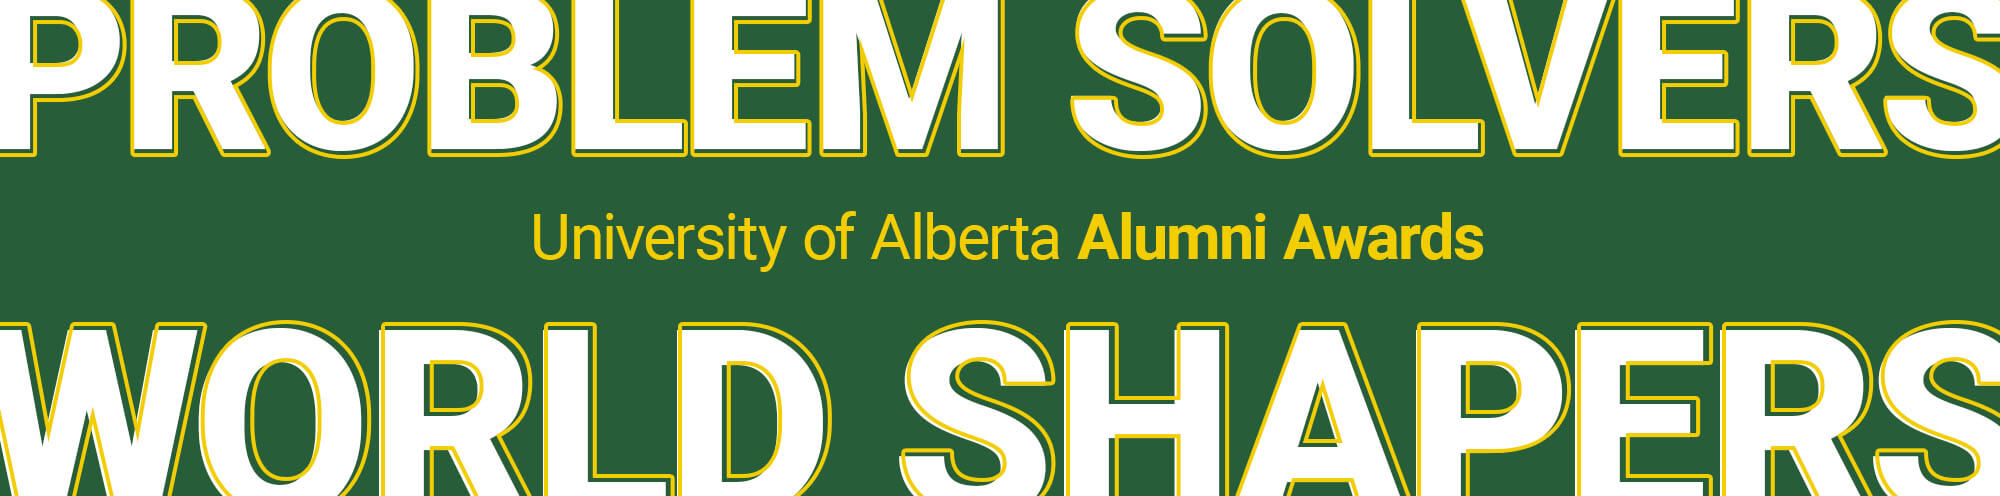 Problem Solvers; World Shapers. University of Alberta Alumni Awards